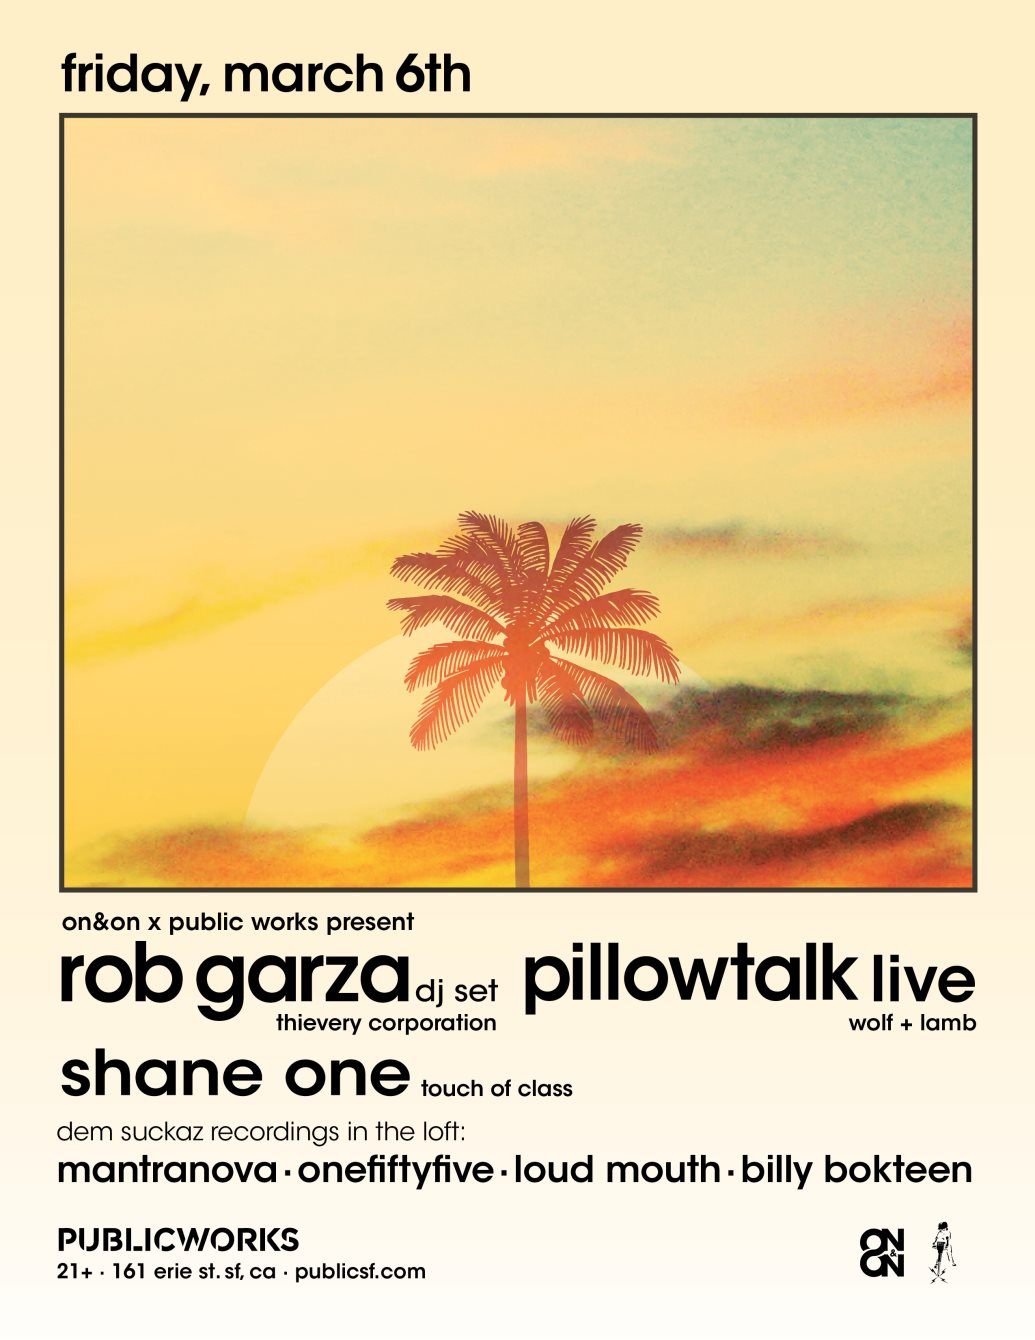 On&On + Public Works presents Pillowtalk Live & Rob Garza - Flyer front